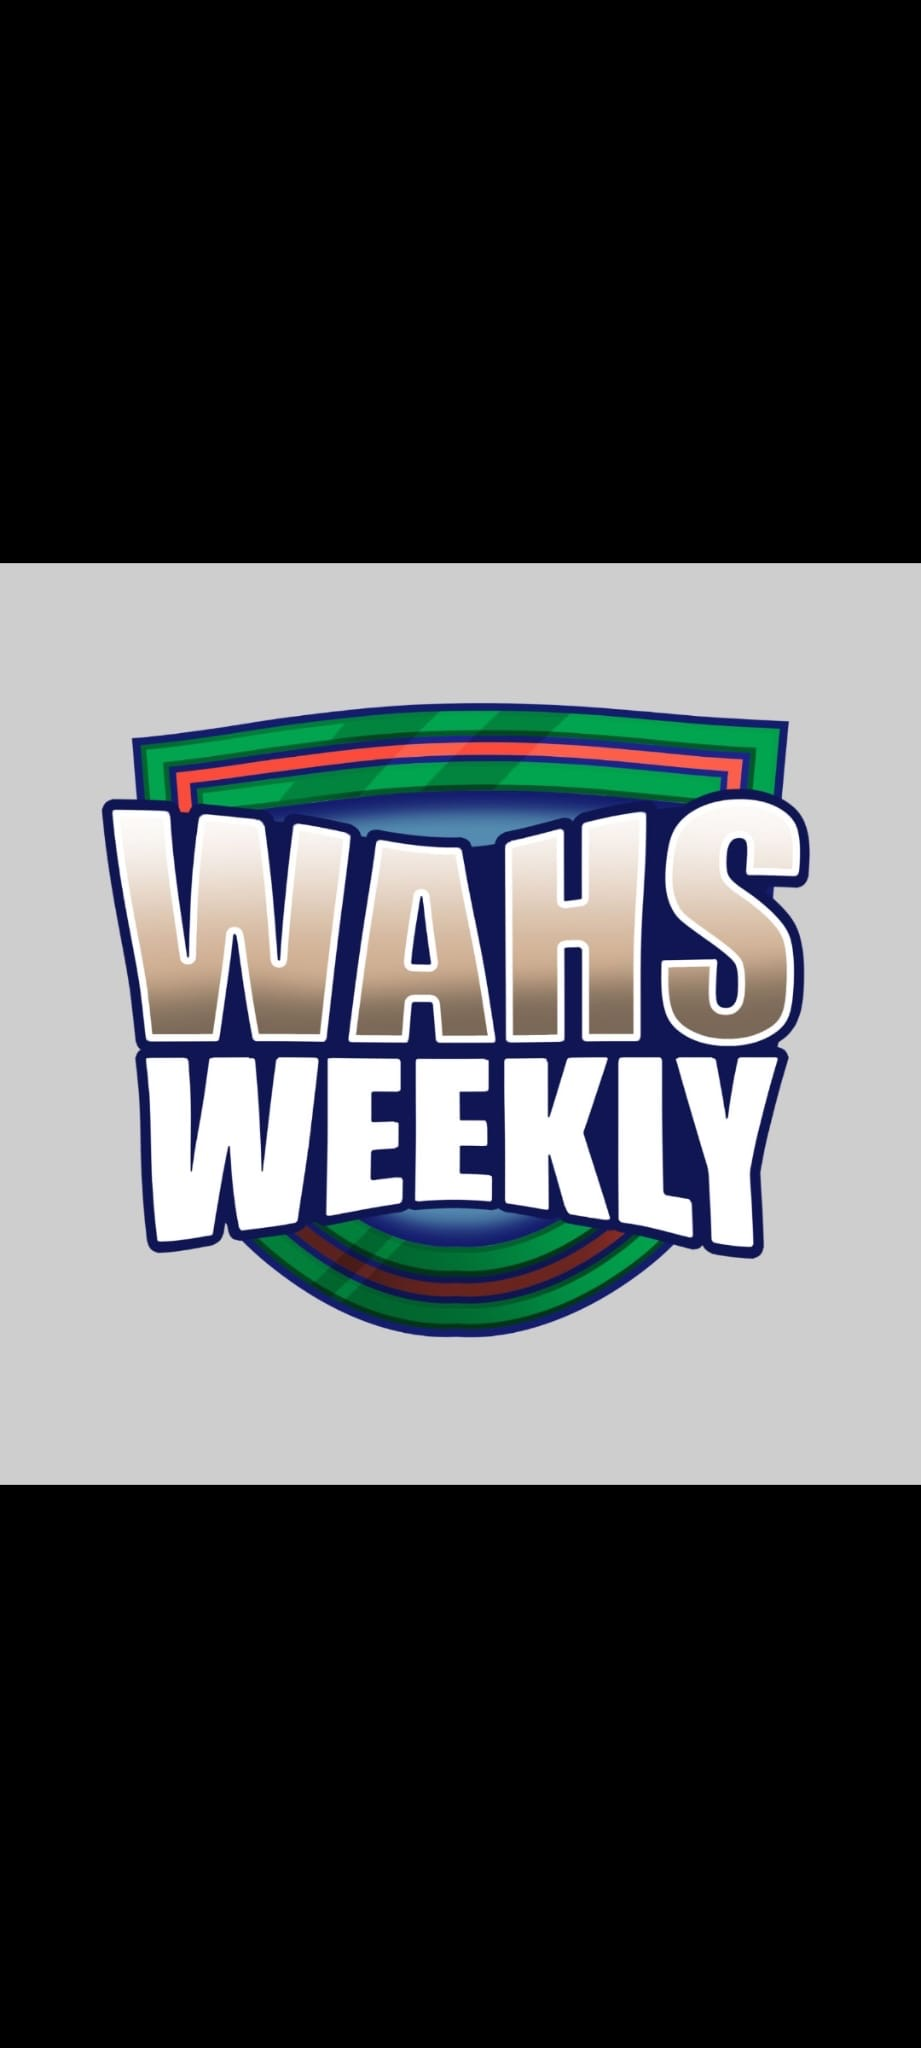 Wahs Weekly - Episode 21 (Talking League)